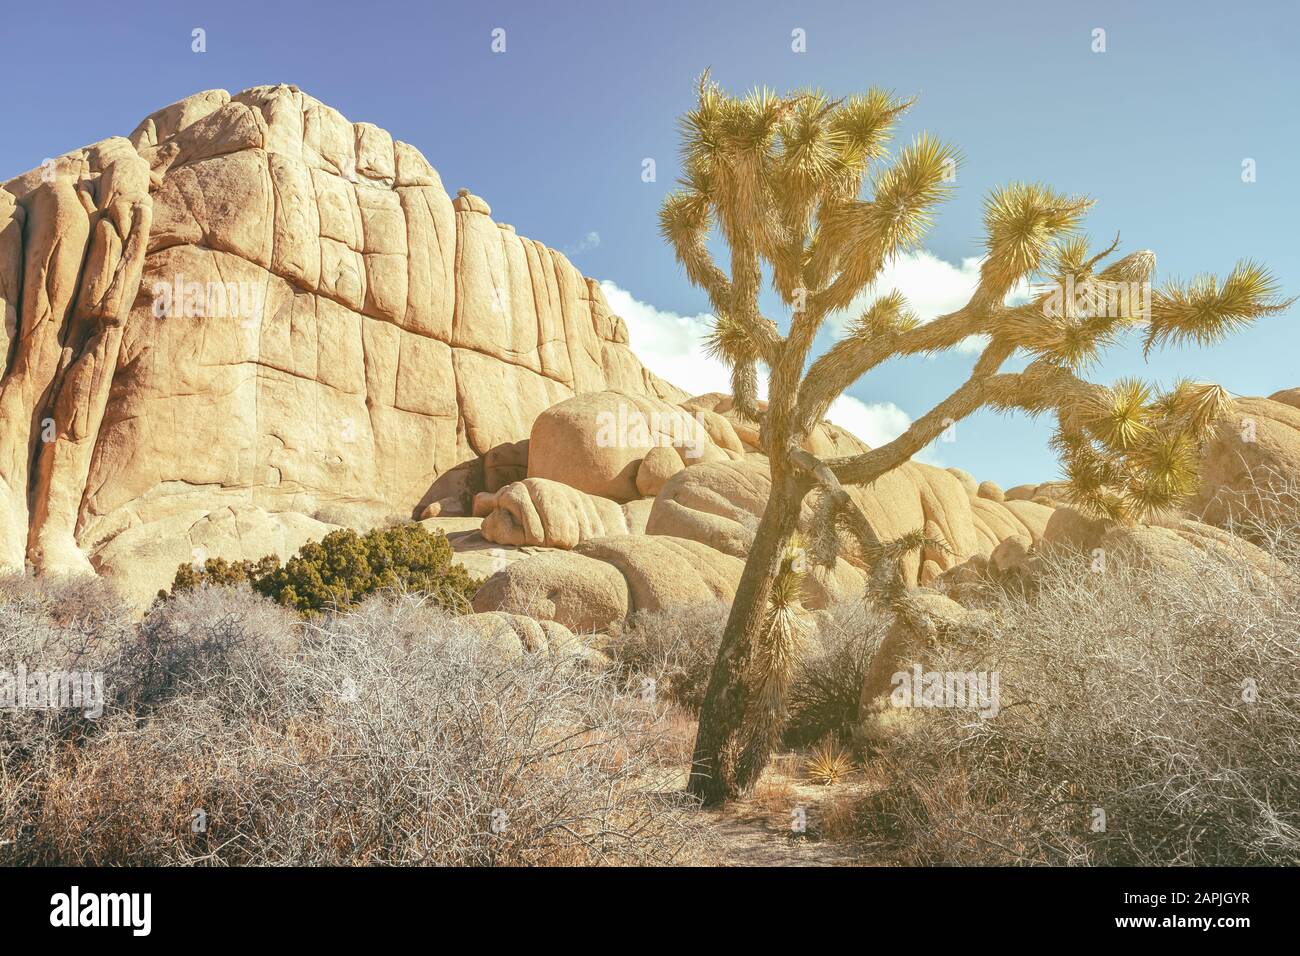 Joshua tree, Yucca brevifolia, and rock formations at Joshua Tree National Park, California, United States. Stock Photo